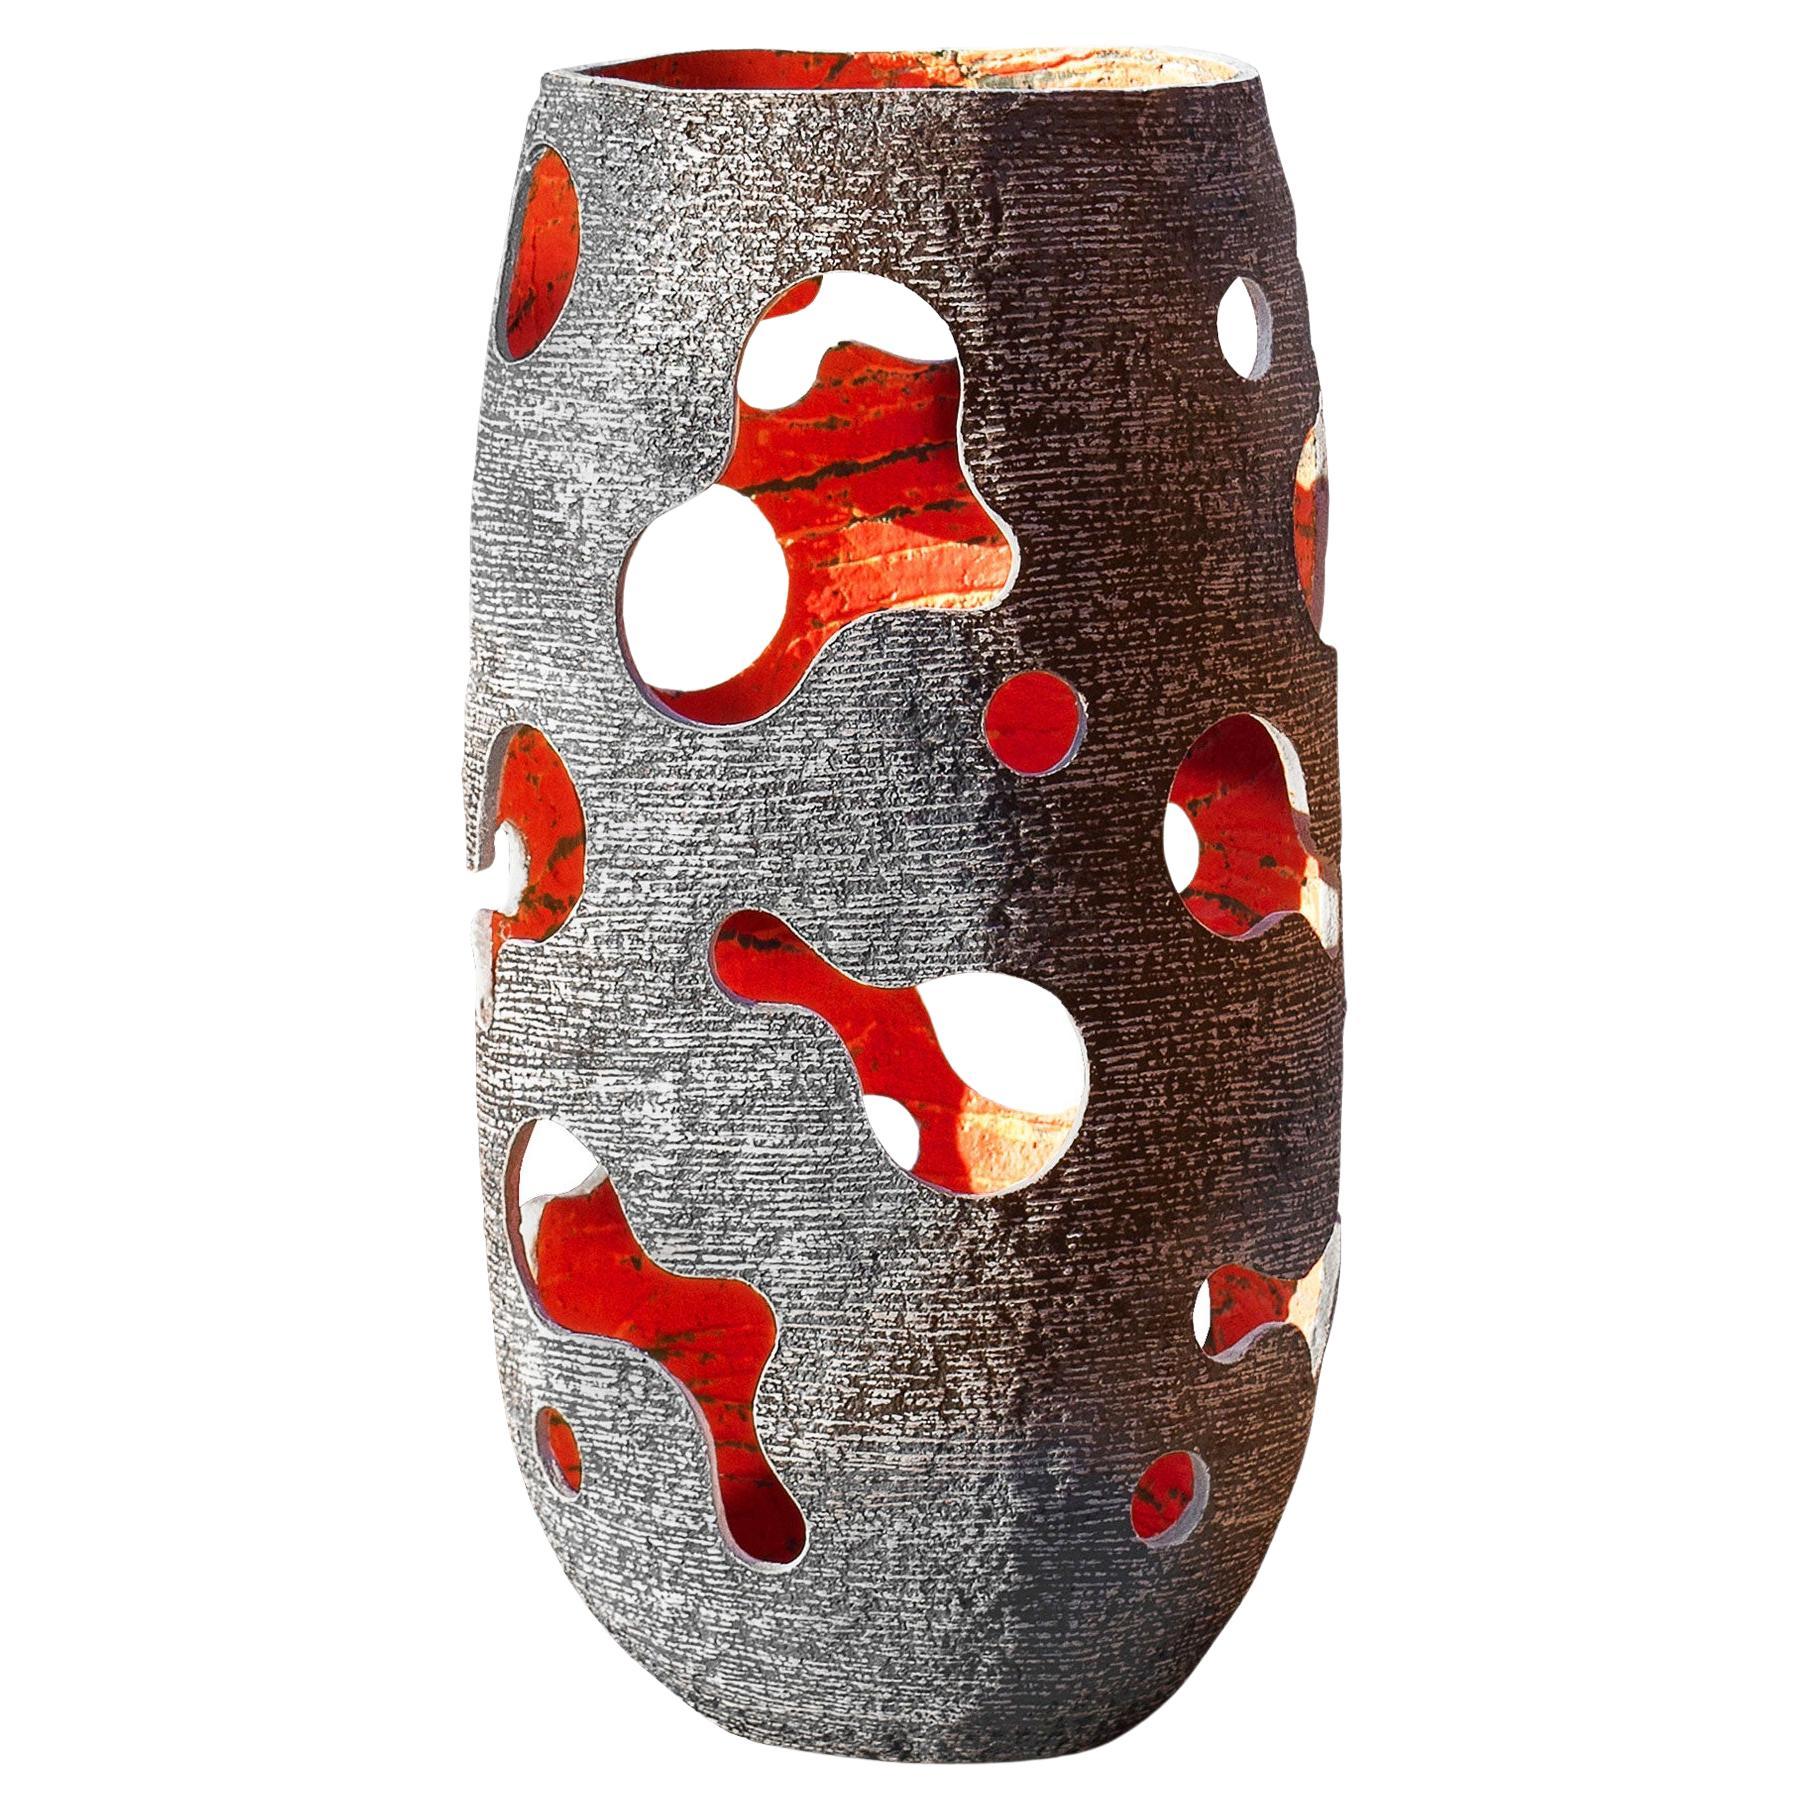 Sculptural Vase, Candle Lantern, Handmade Home Decor by Donatas Žukauskas